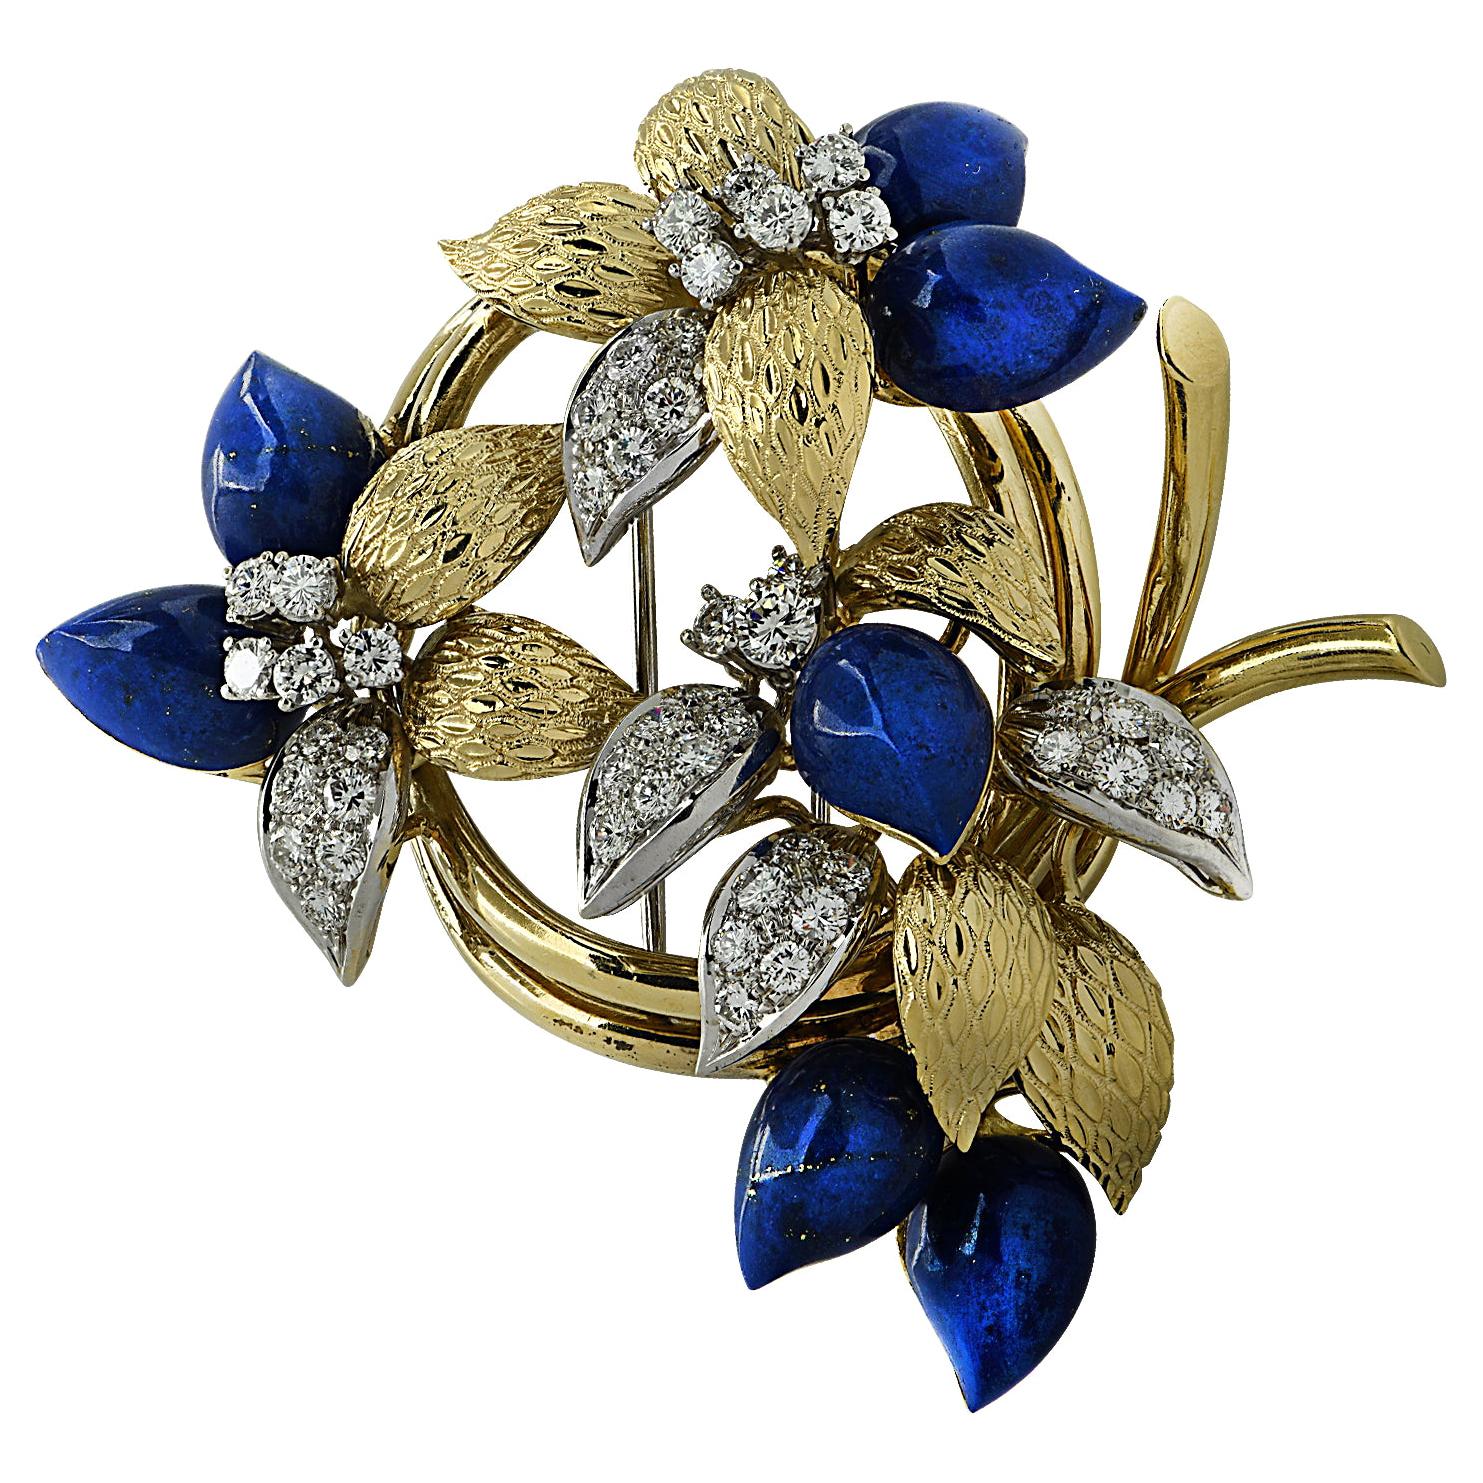 Tiffany & Co. 3.51 Carat Diamond and Lapis Lazuli Brooch Pin